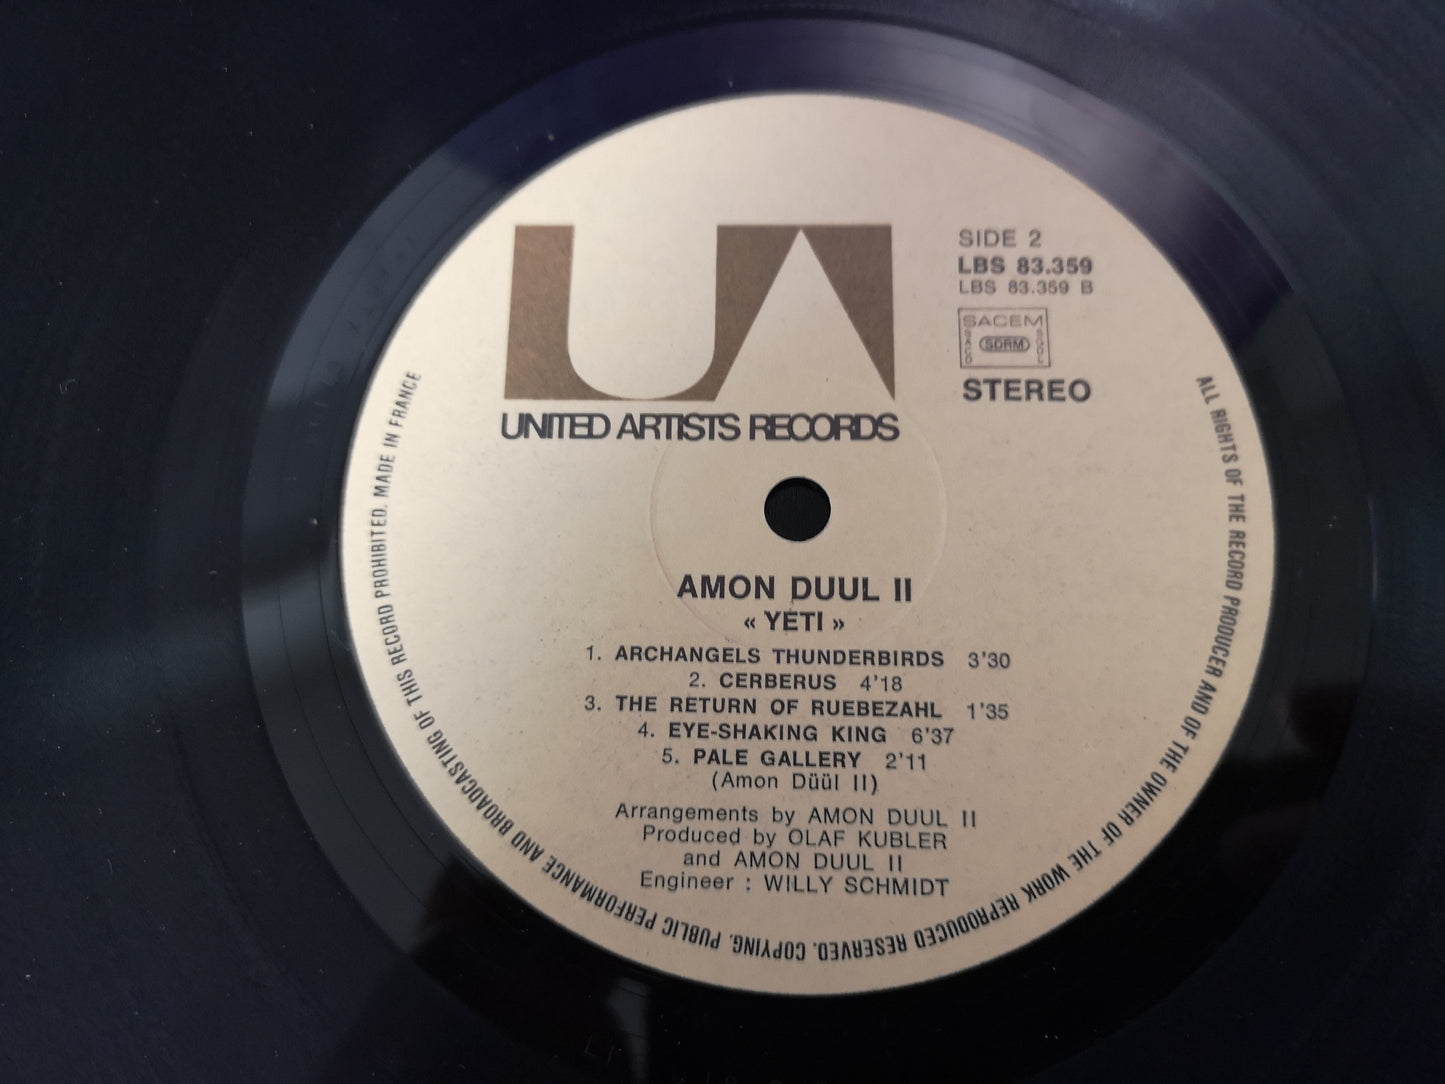 Amon Düül II "Yeti" Orig Fr (2nd Label) VG++/VG++ 2 Lps